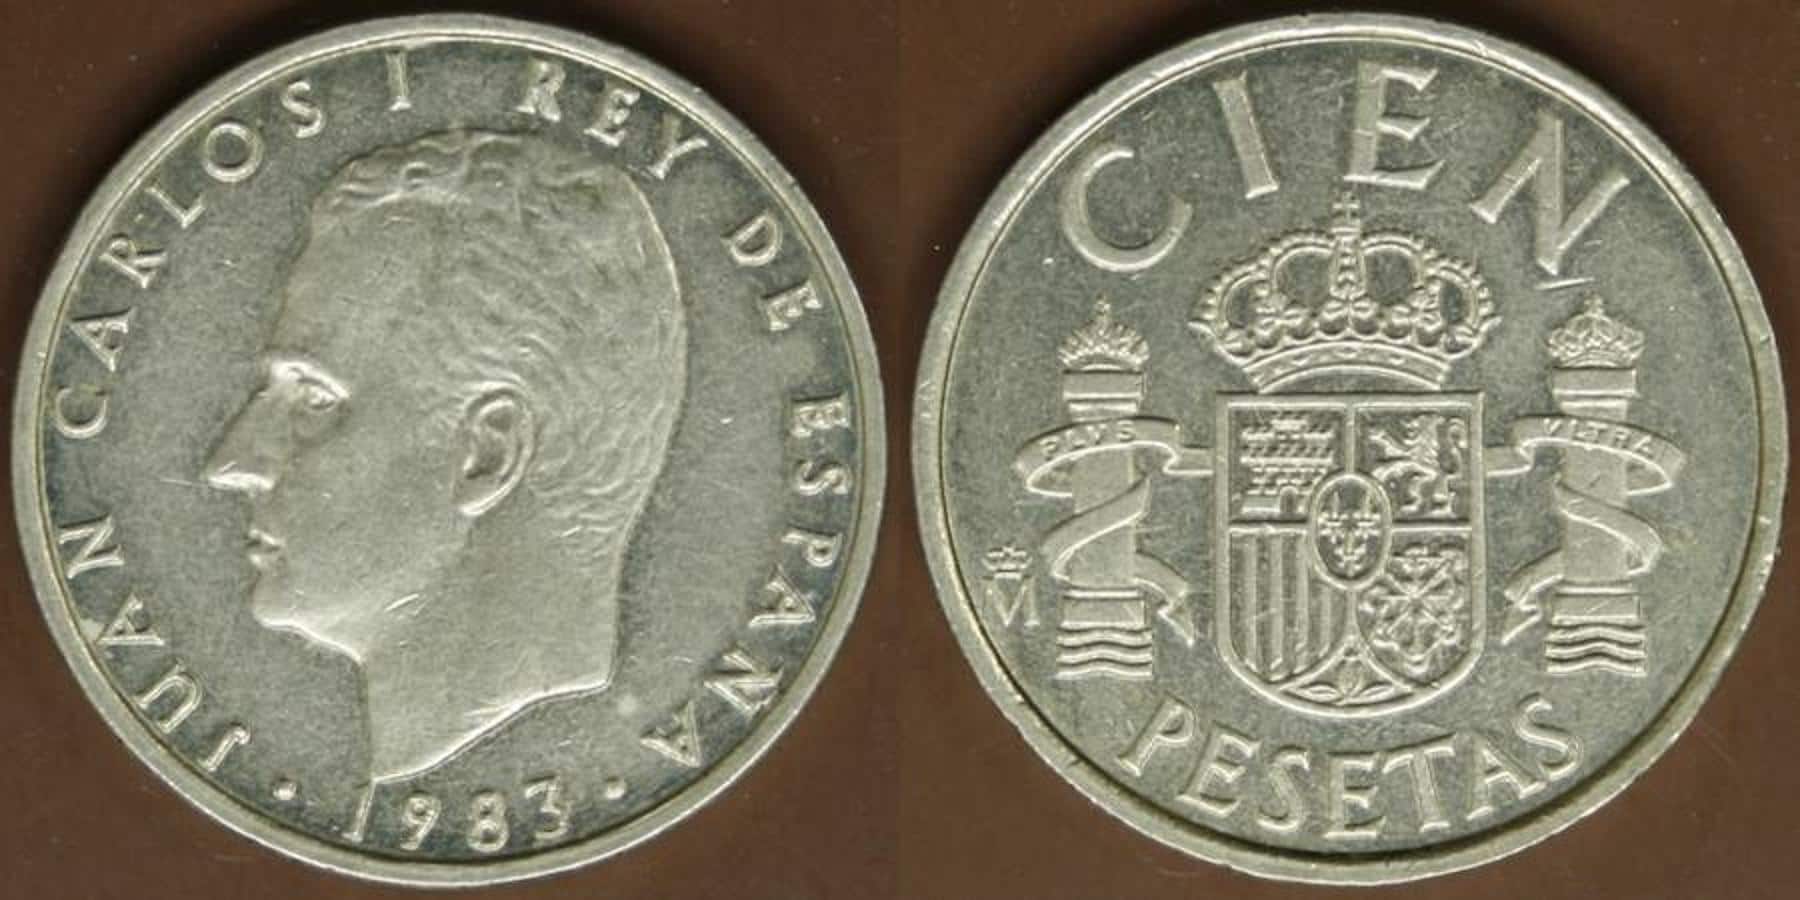 100 Pesetas 1983. Los míticos «20 duros» están representados por esta dorada moneda de 1983, valorada en 55 euros.